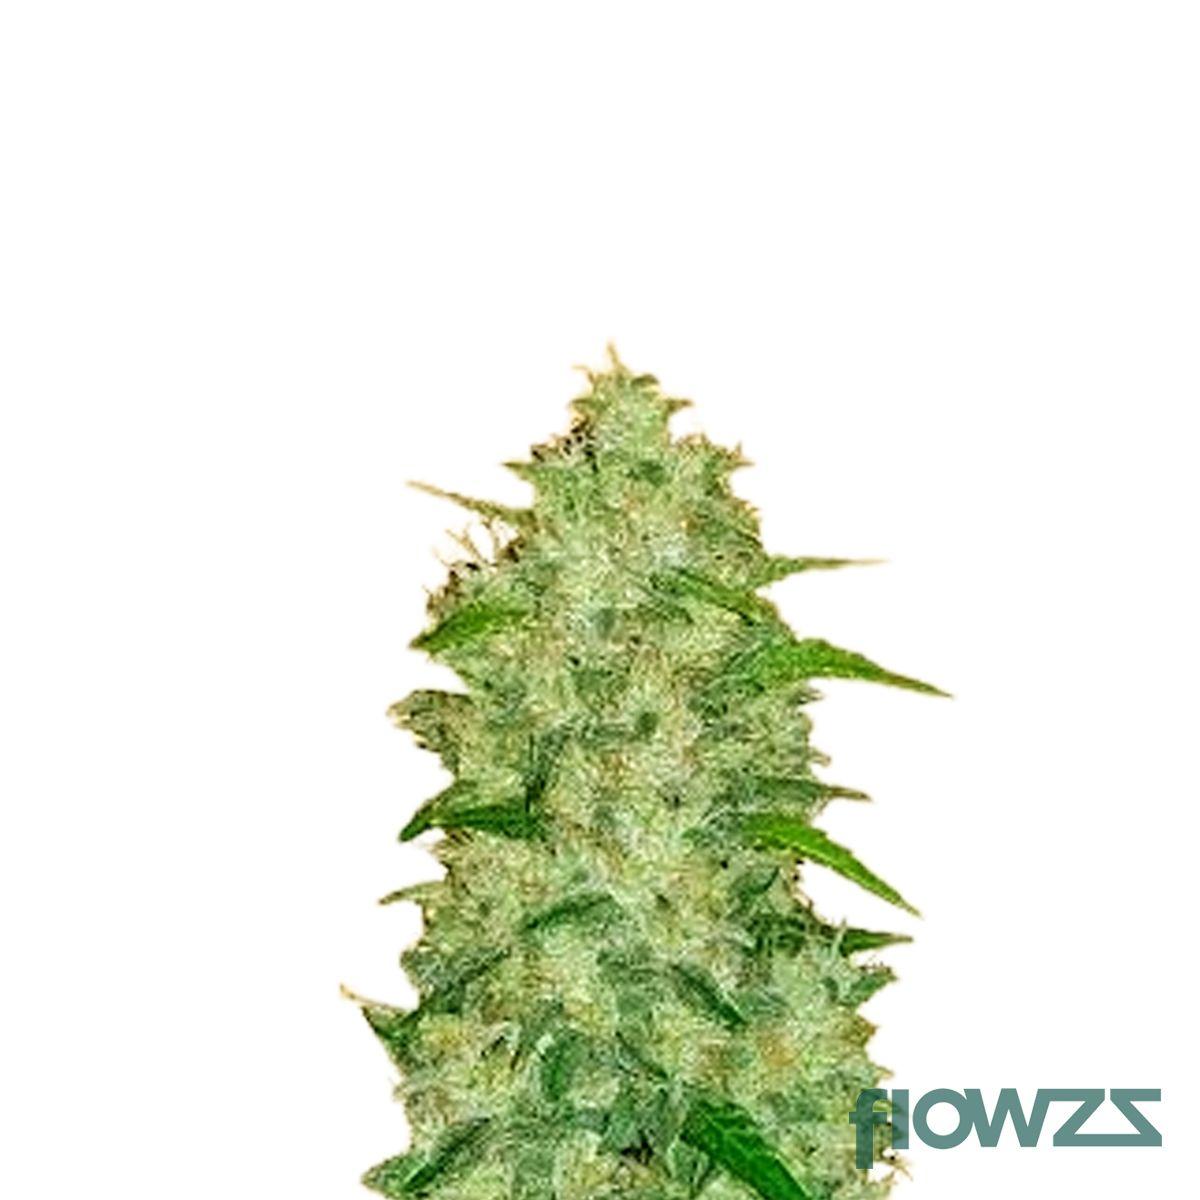 Chemdawg 91 x Captain Krypt OG  Cannabis Strain - flowzz.com Preisvergleich